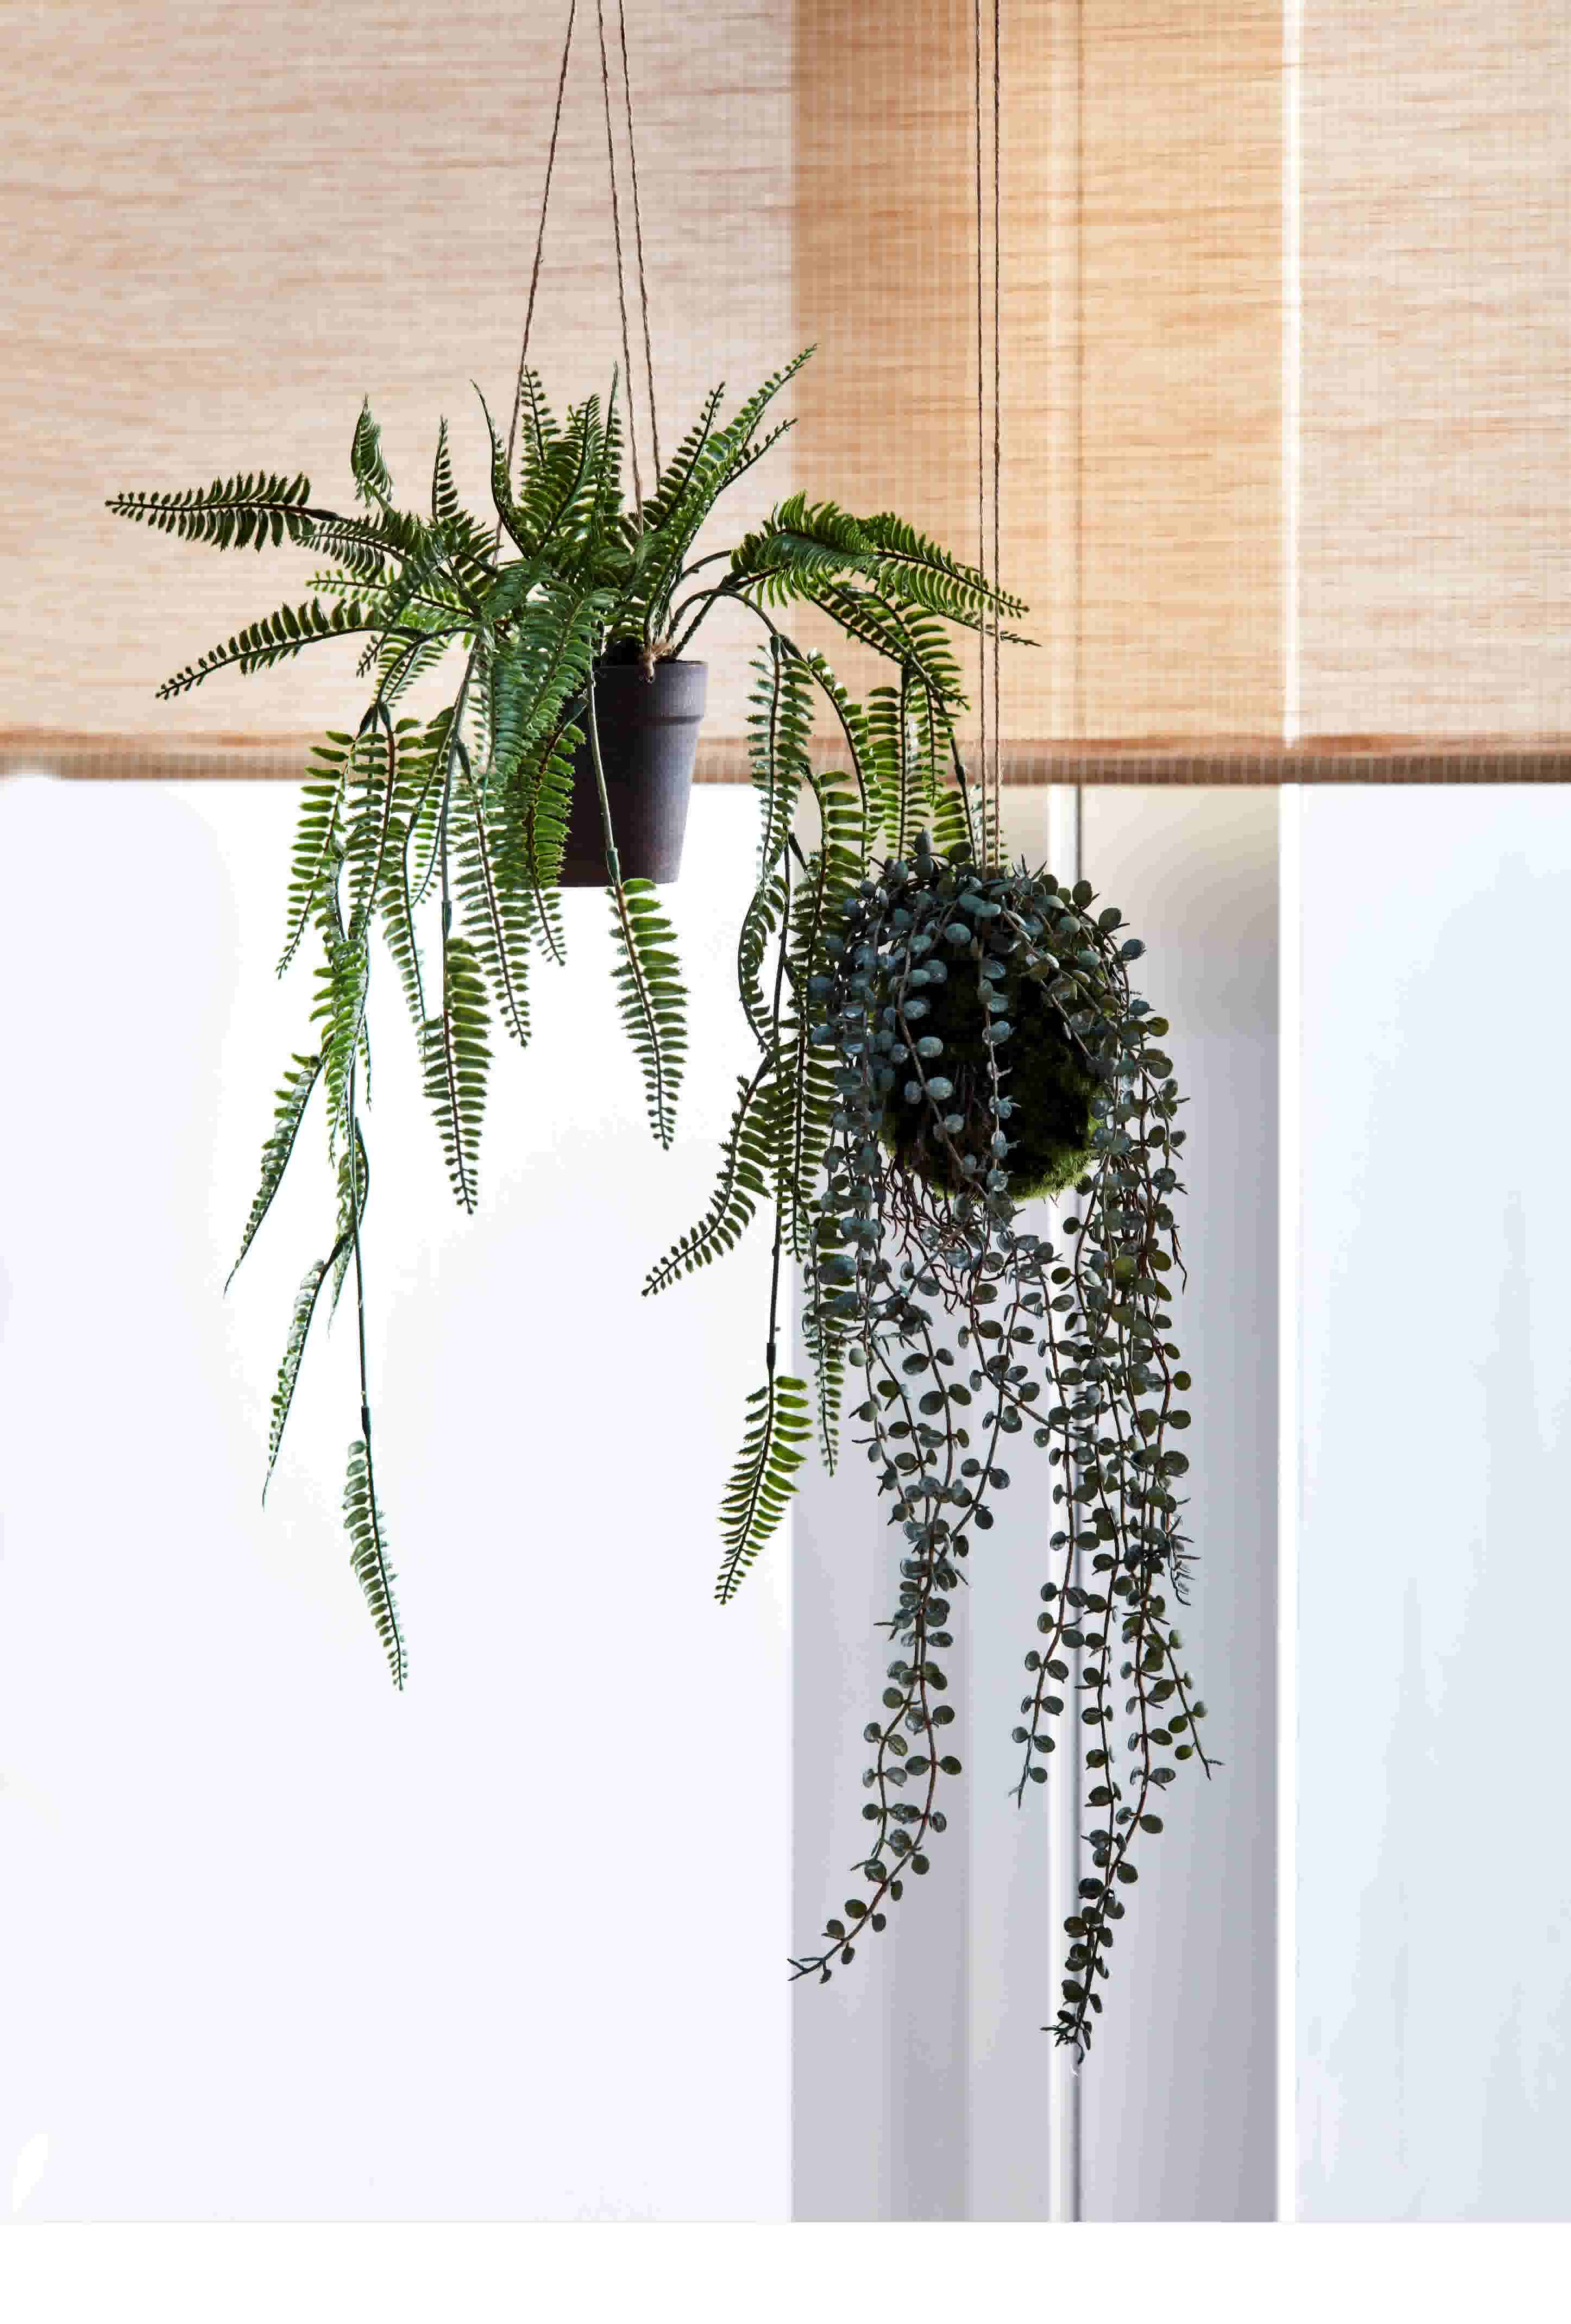 in huis: woonkamer stylen met kamerplanten Karwei